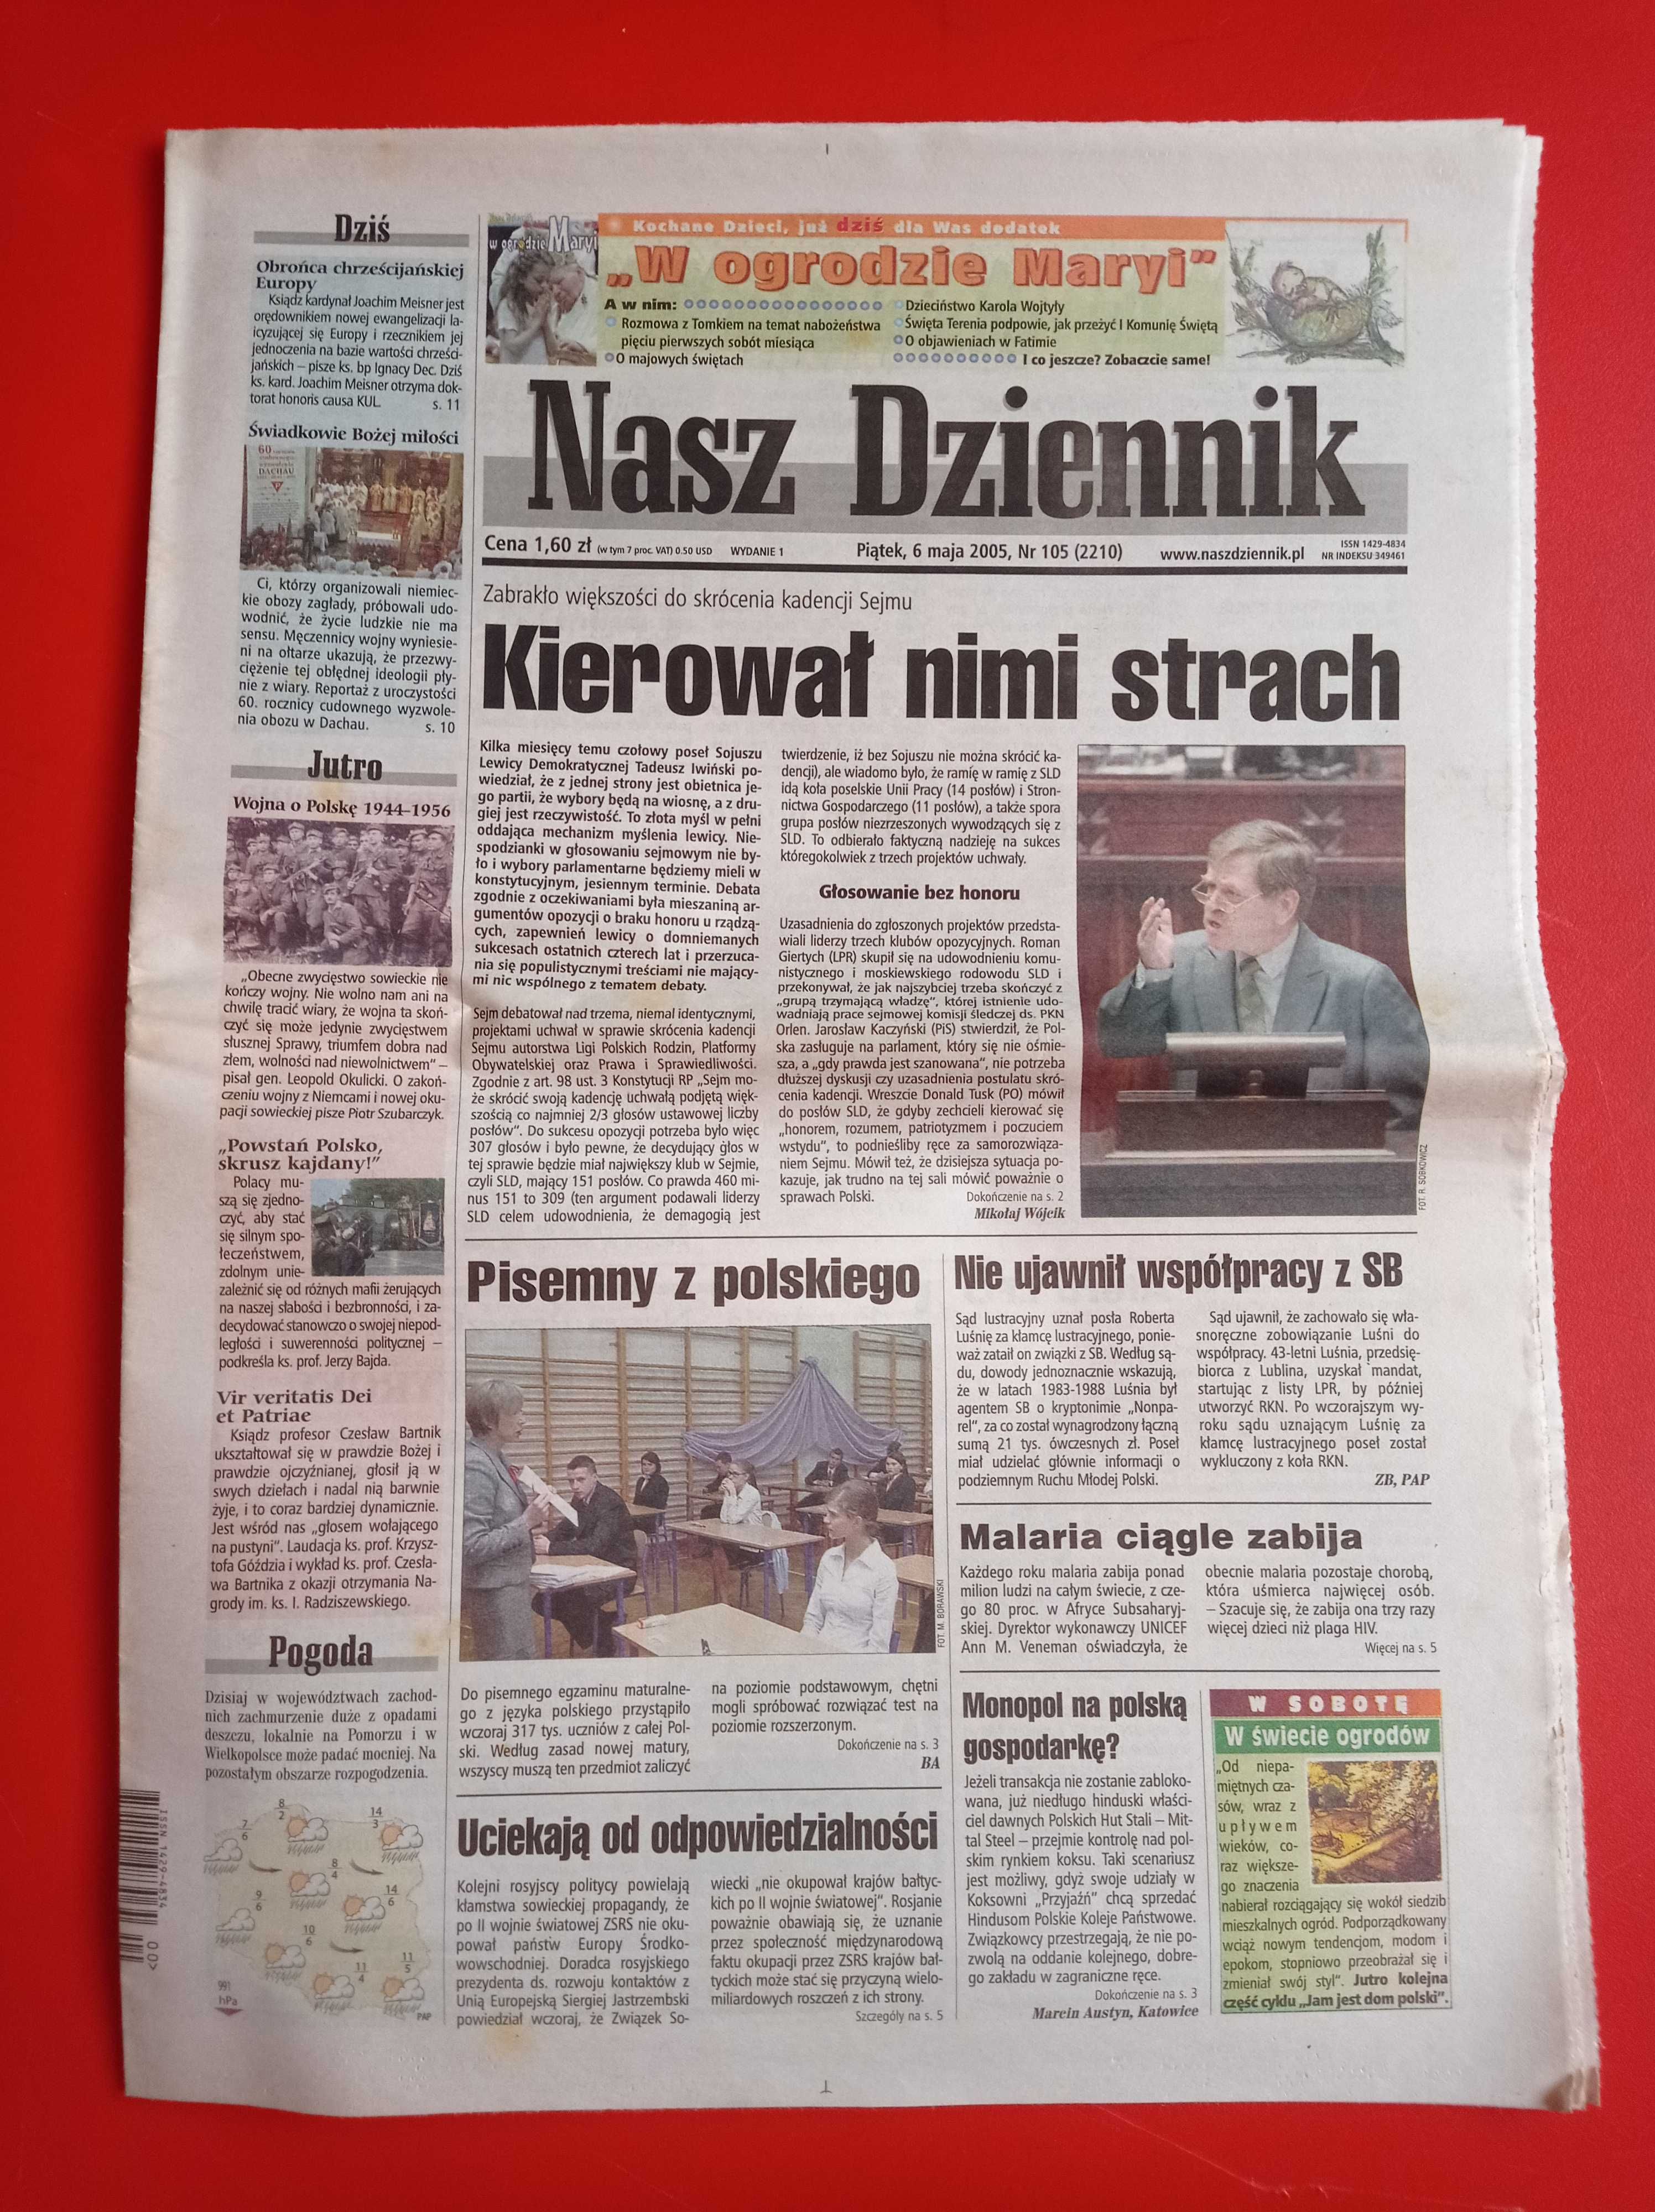 Nasz Dziennik, nr 105/2005, 6 maja 2005